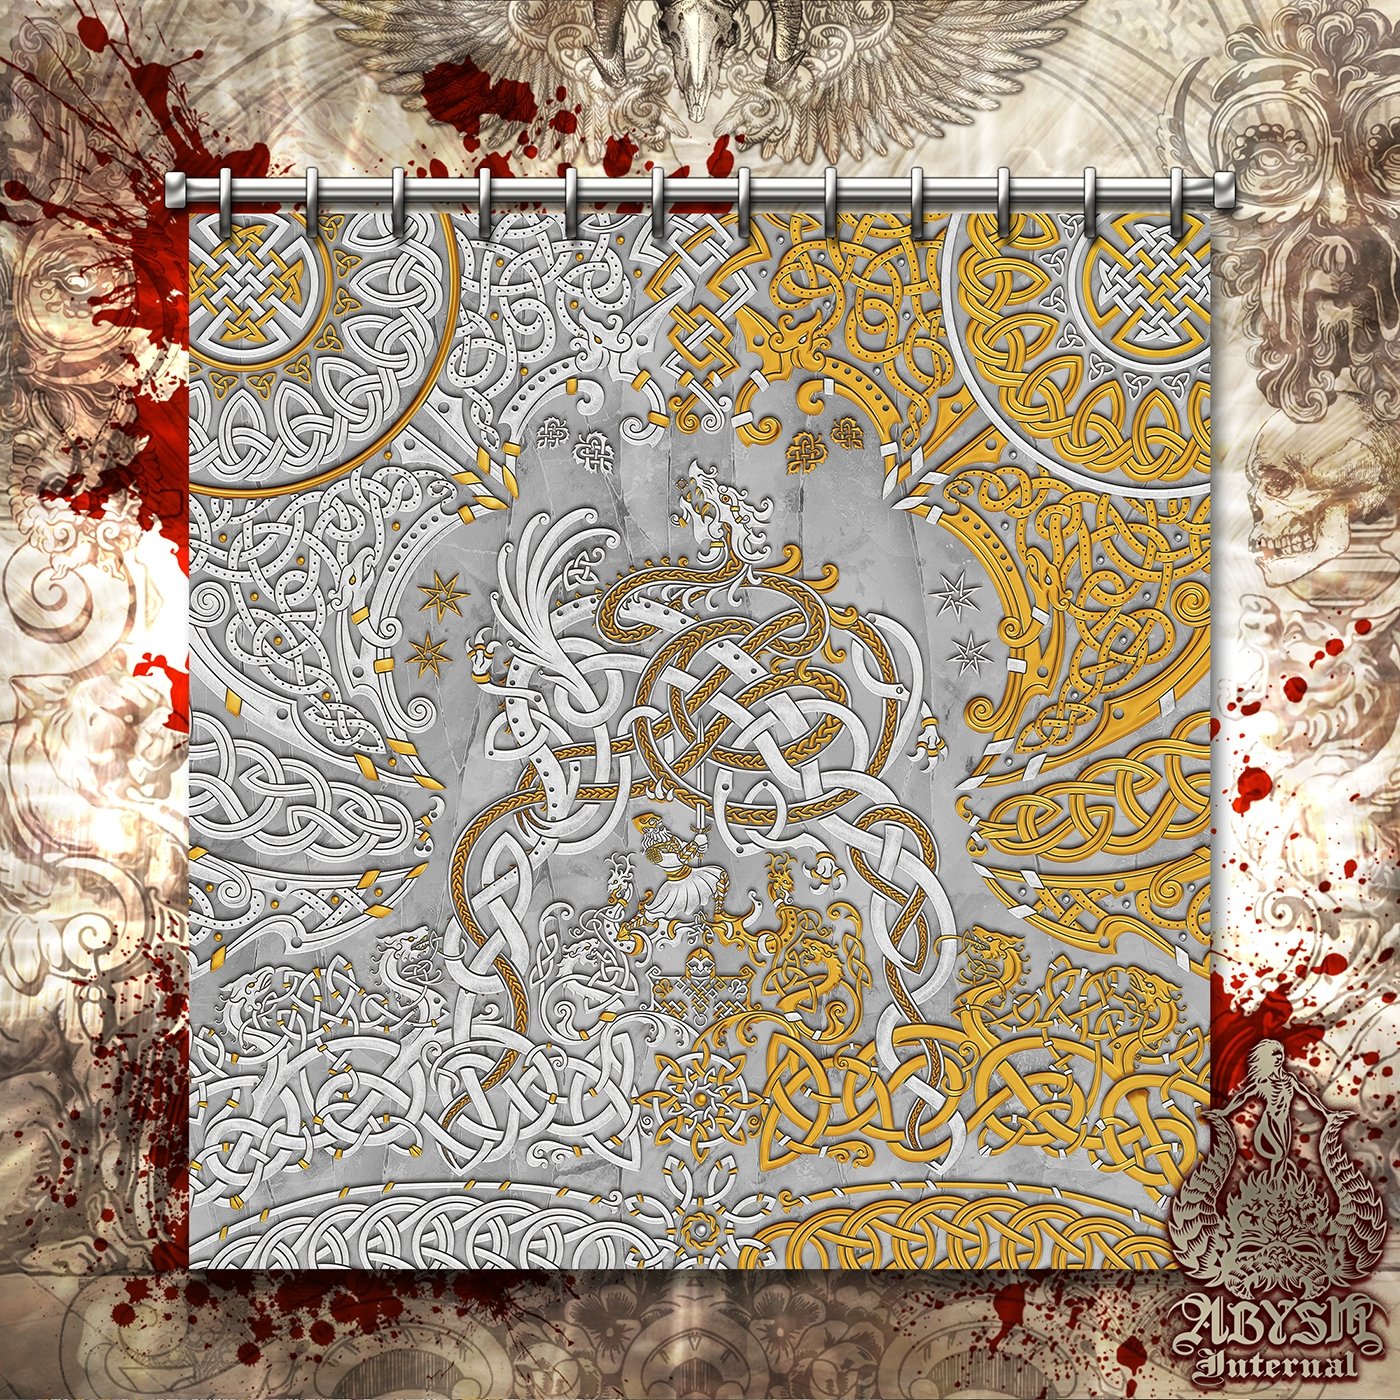 Viking Shower Curtain, Bathroom Decor, Nordic & Norse Art, Dragon Fafnir - Stone Gold - Abysm Internal